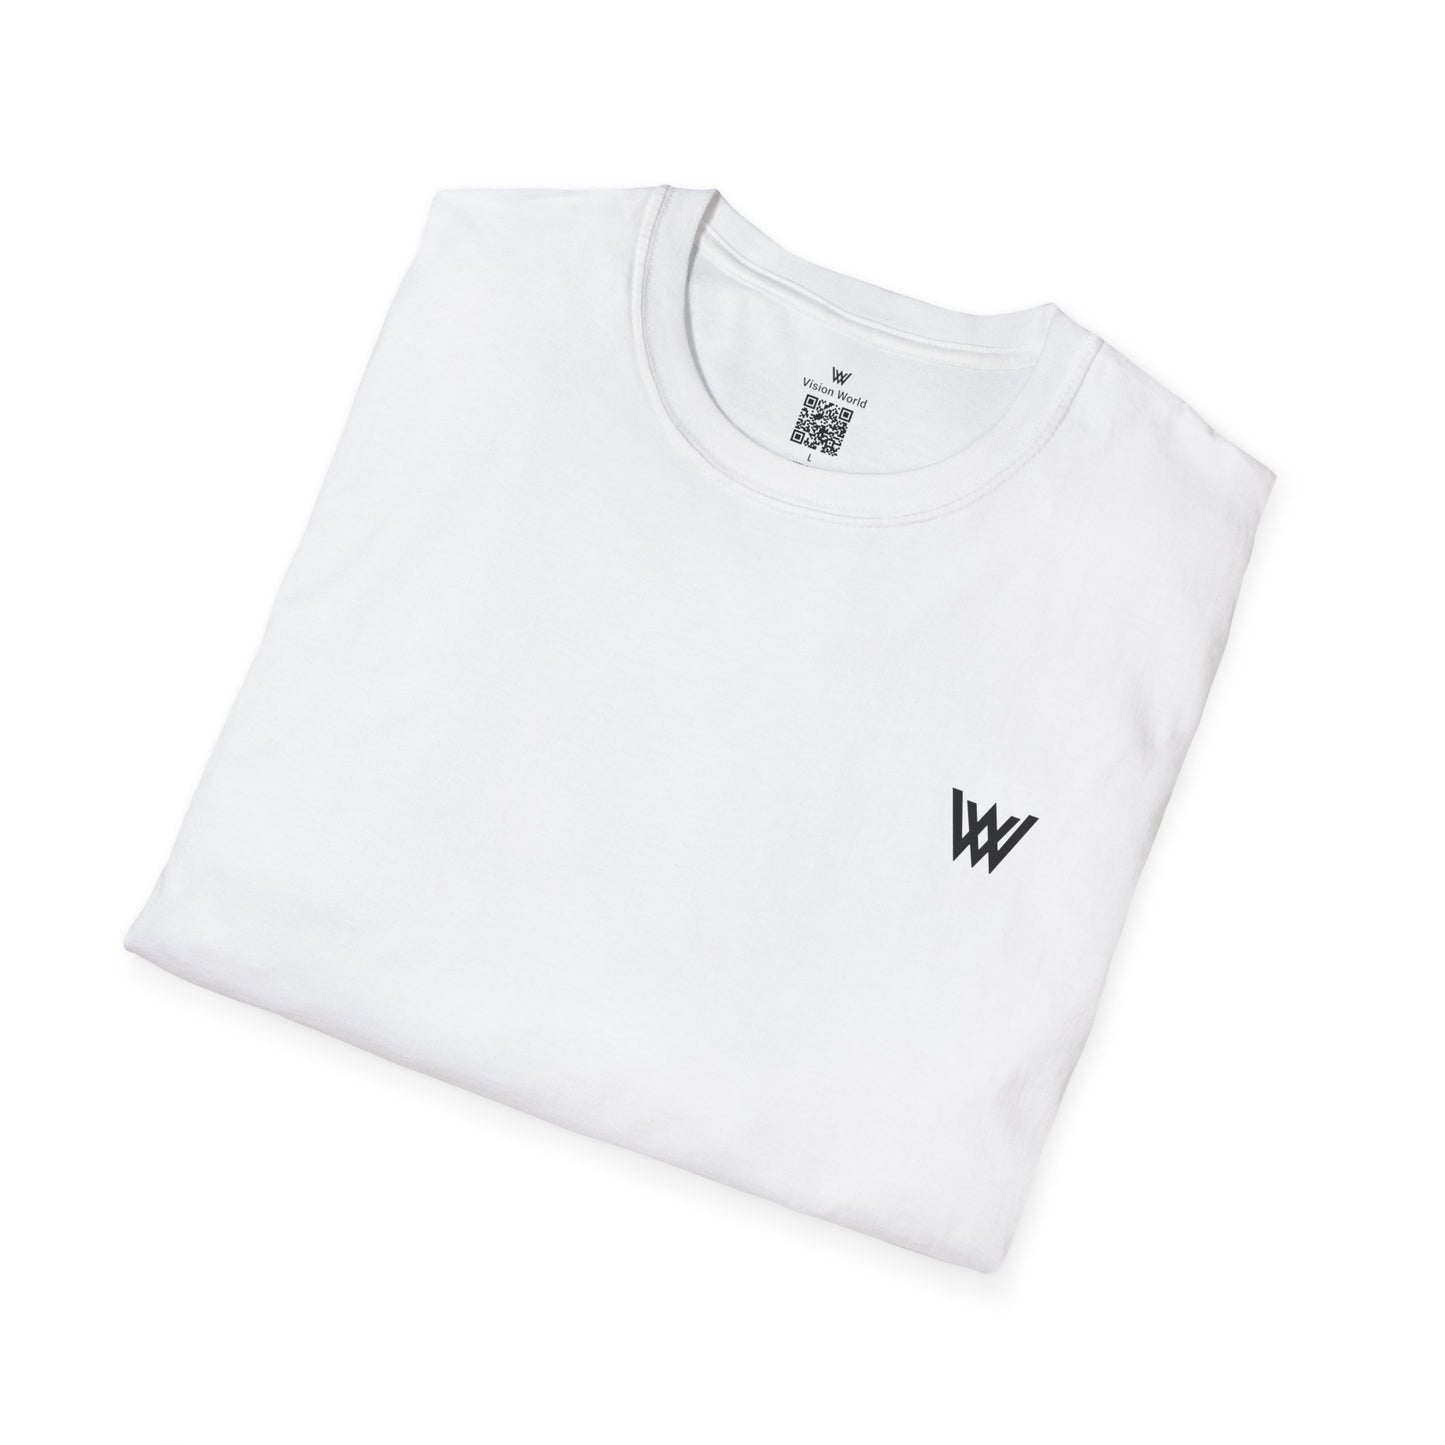 Vision World White Palm Tree shirt